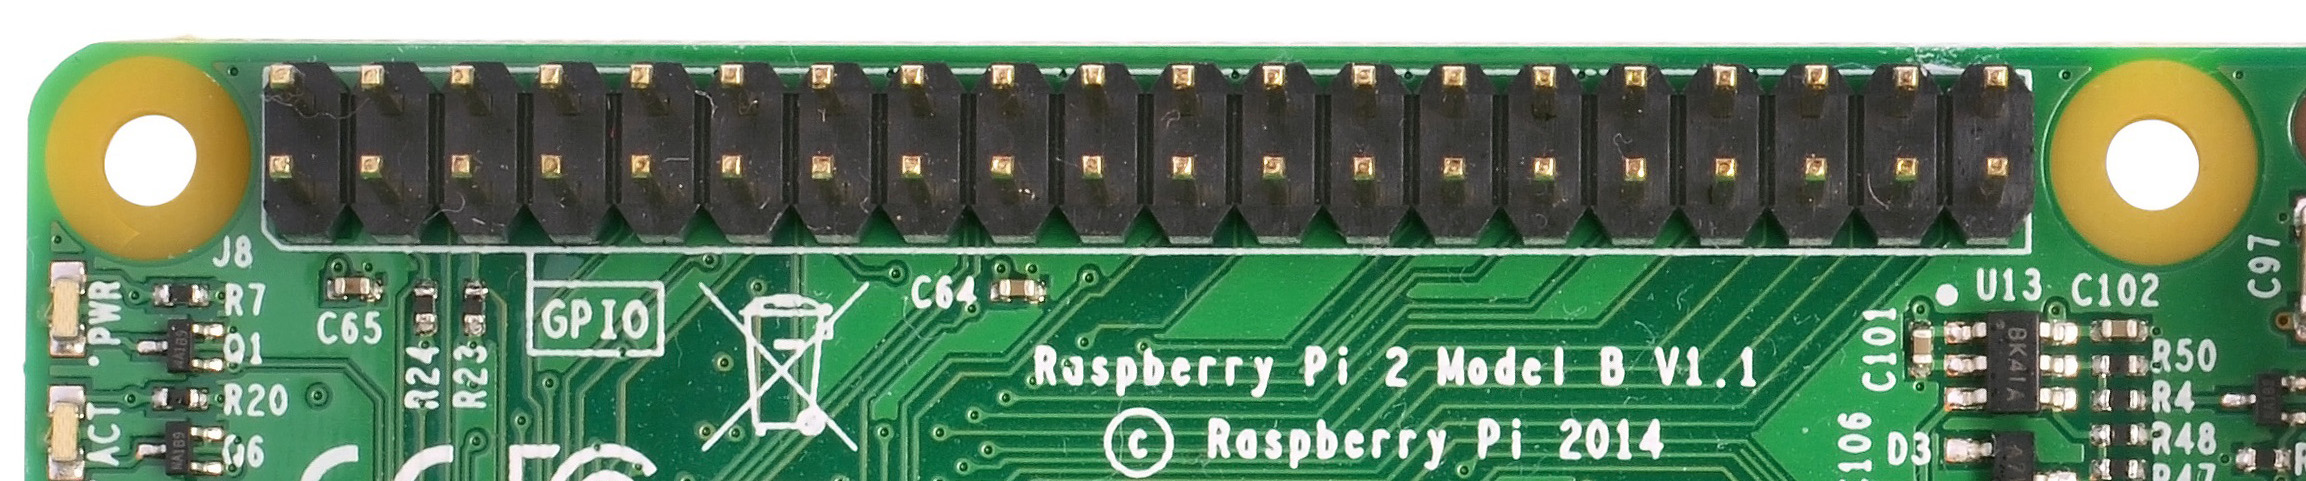 Raspberry Pi GPIO pins